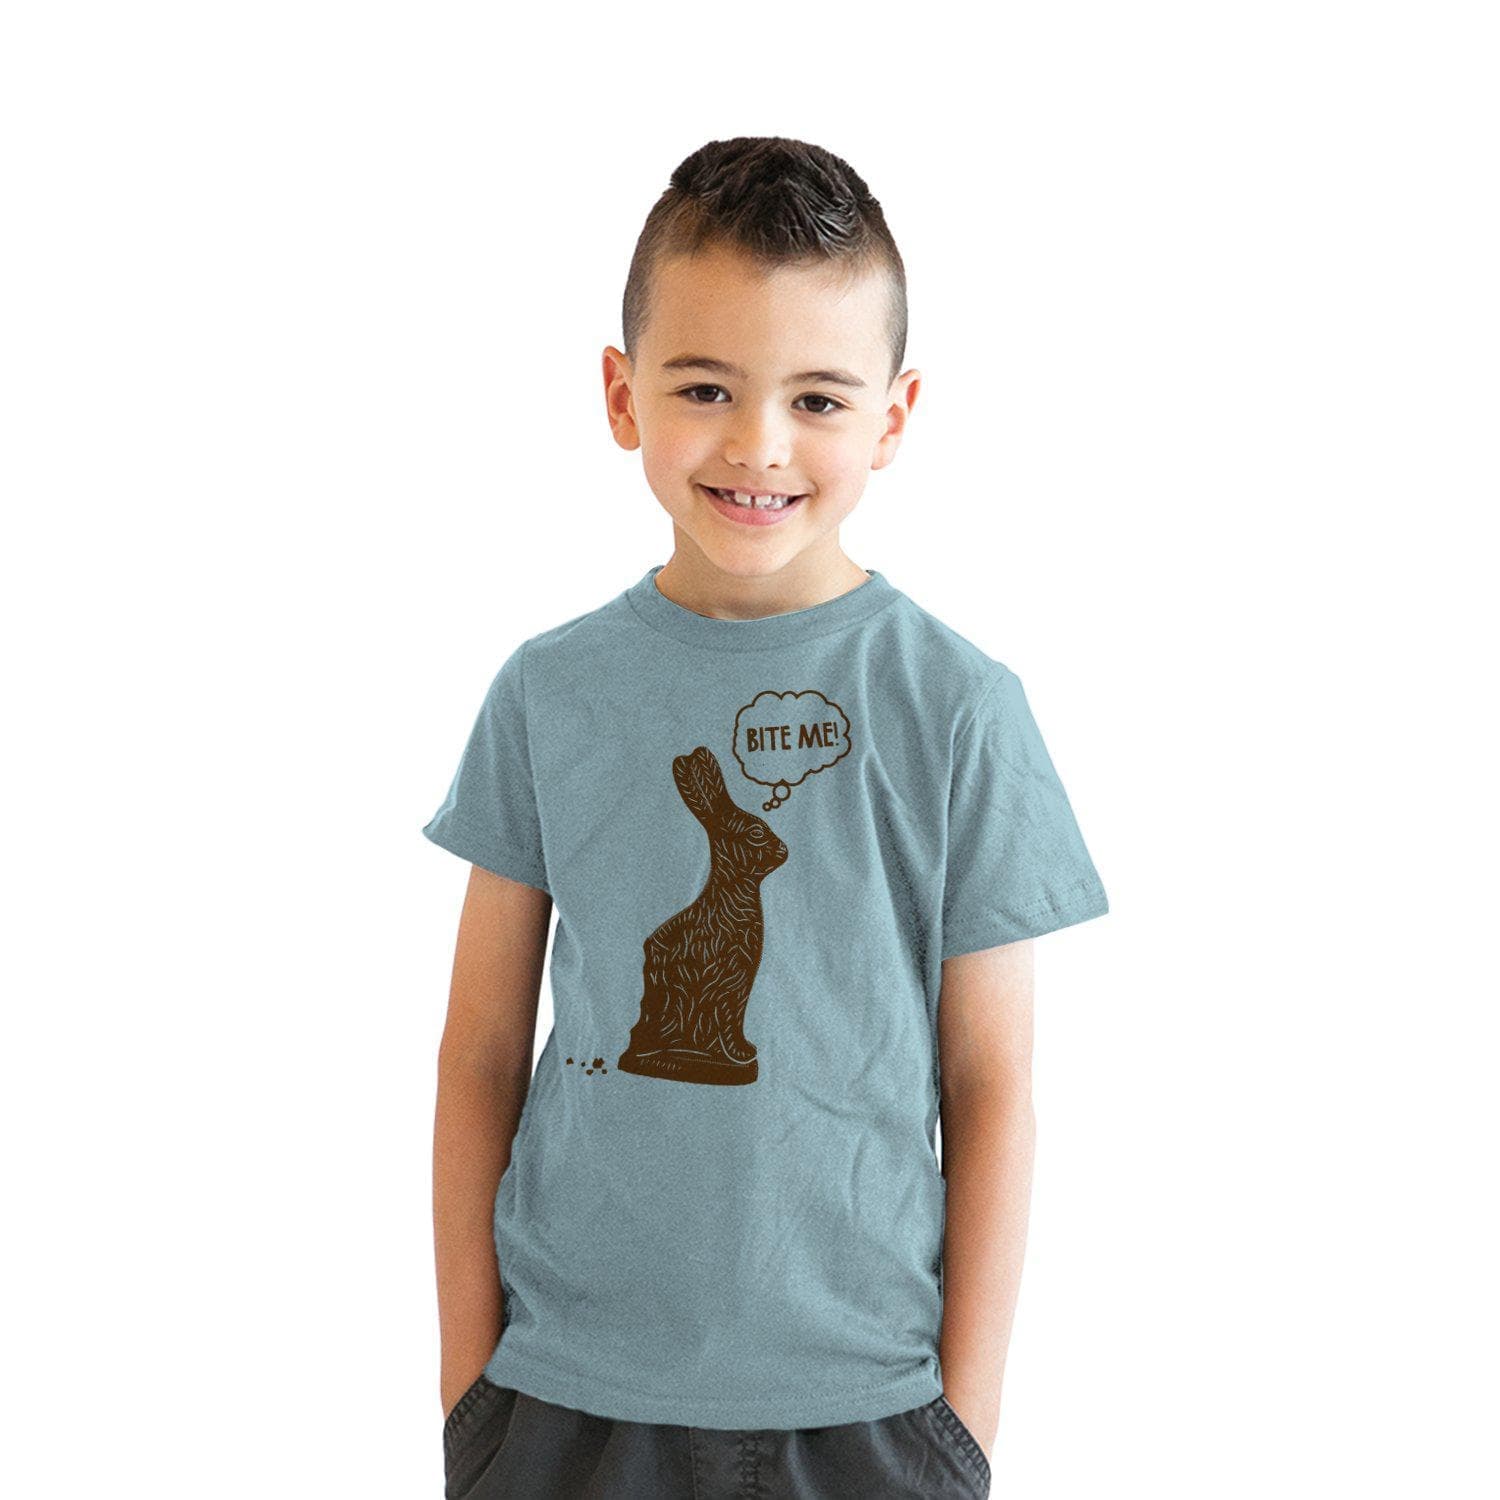 Bite Me Youth Tshirt - Crazy Dog T-Shirts